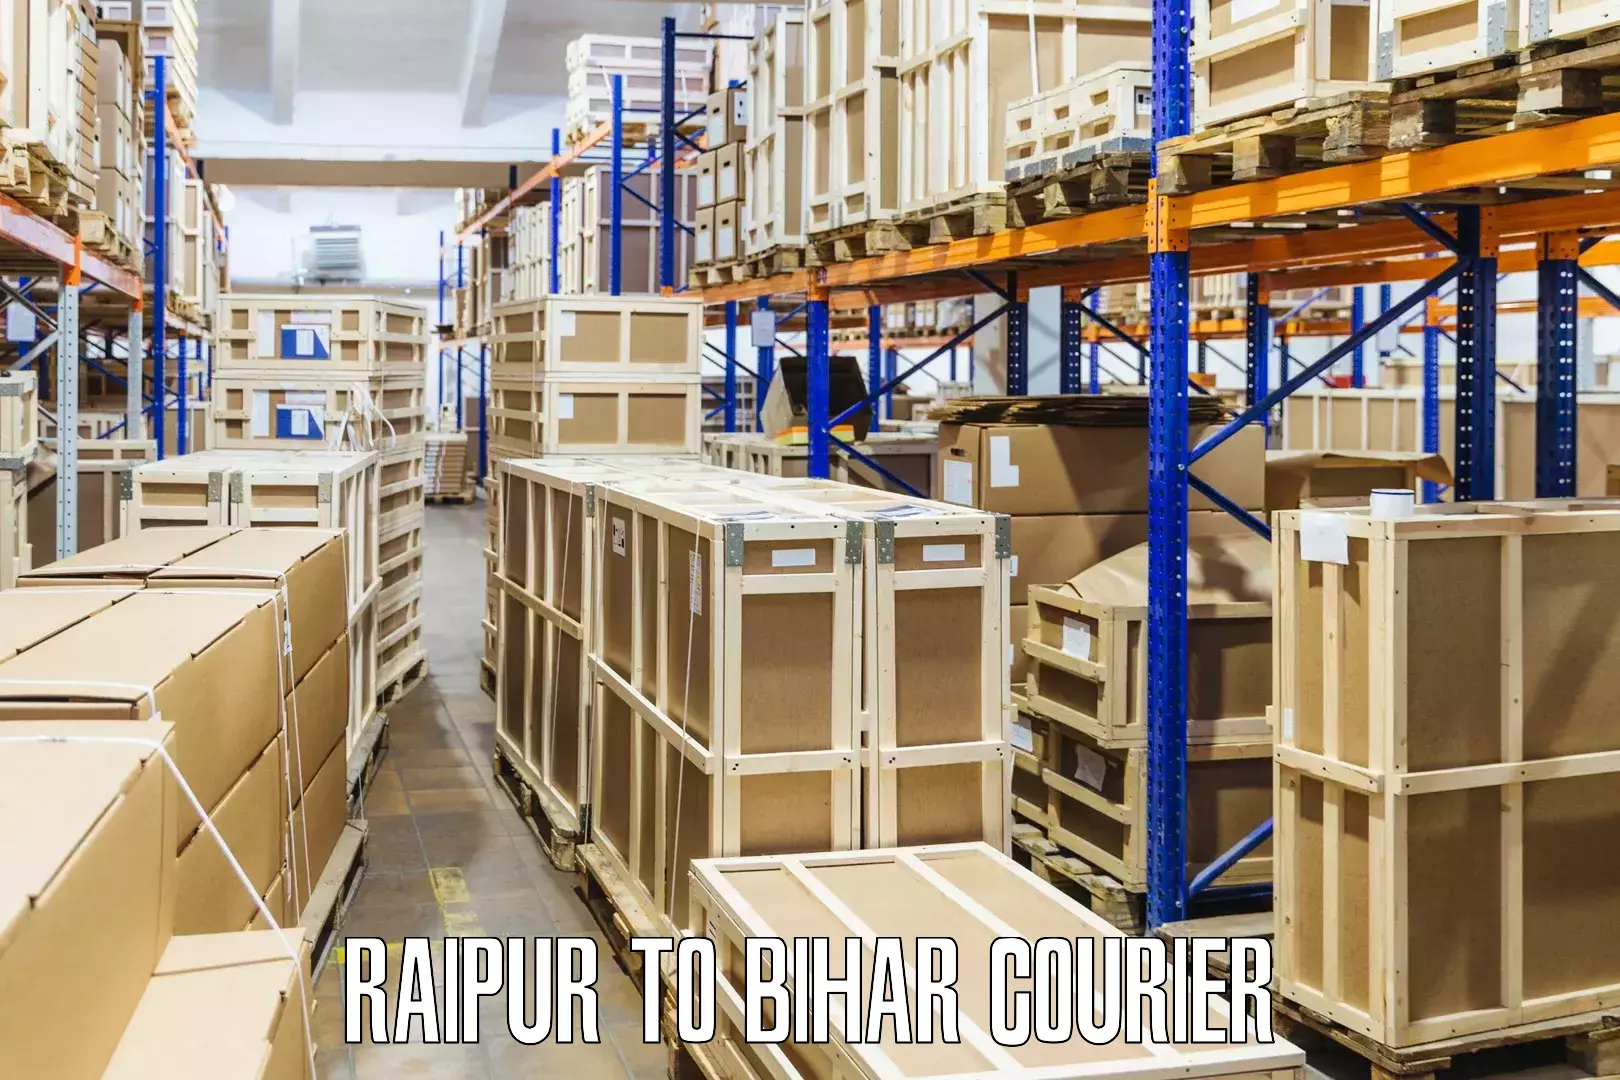 Delivery service partnership Raipur to Bihar